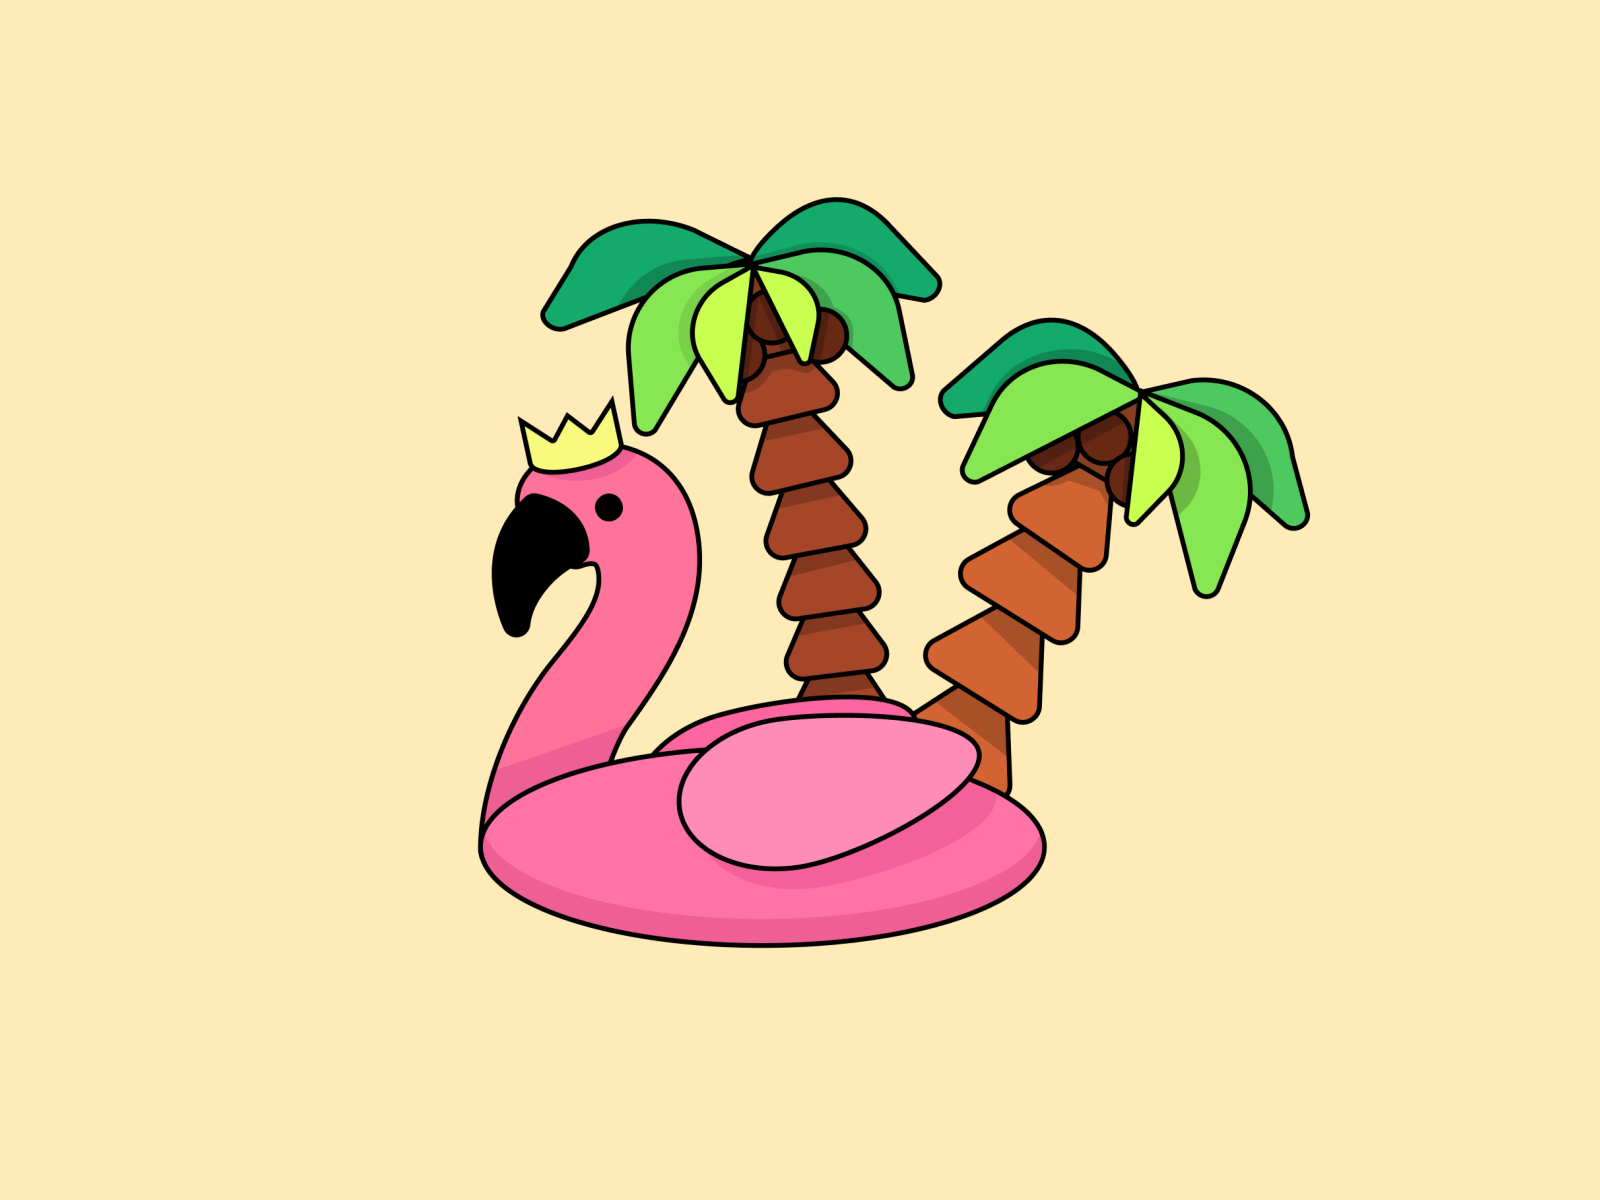 summer tropical flamingo clipart